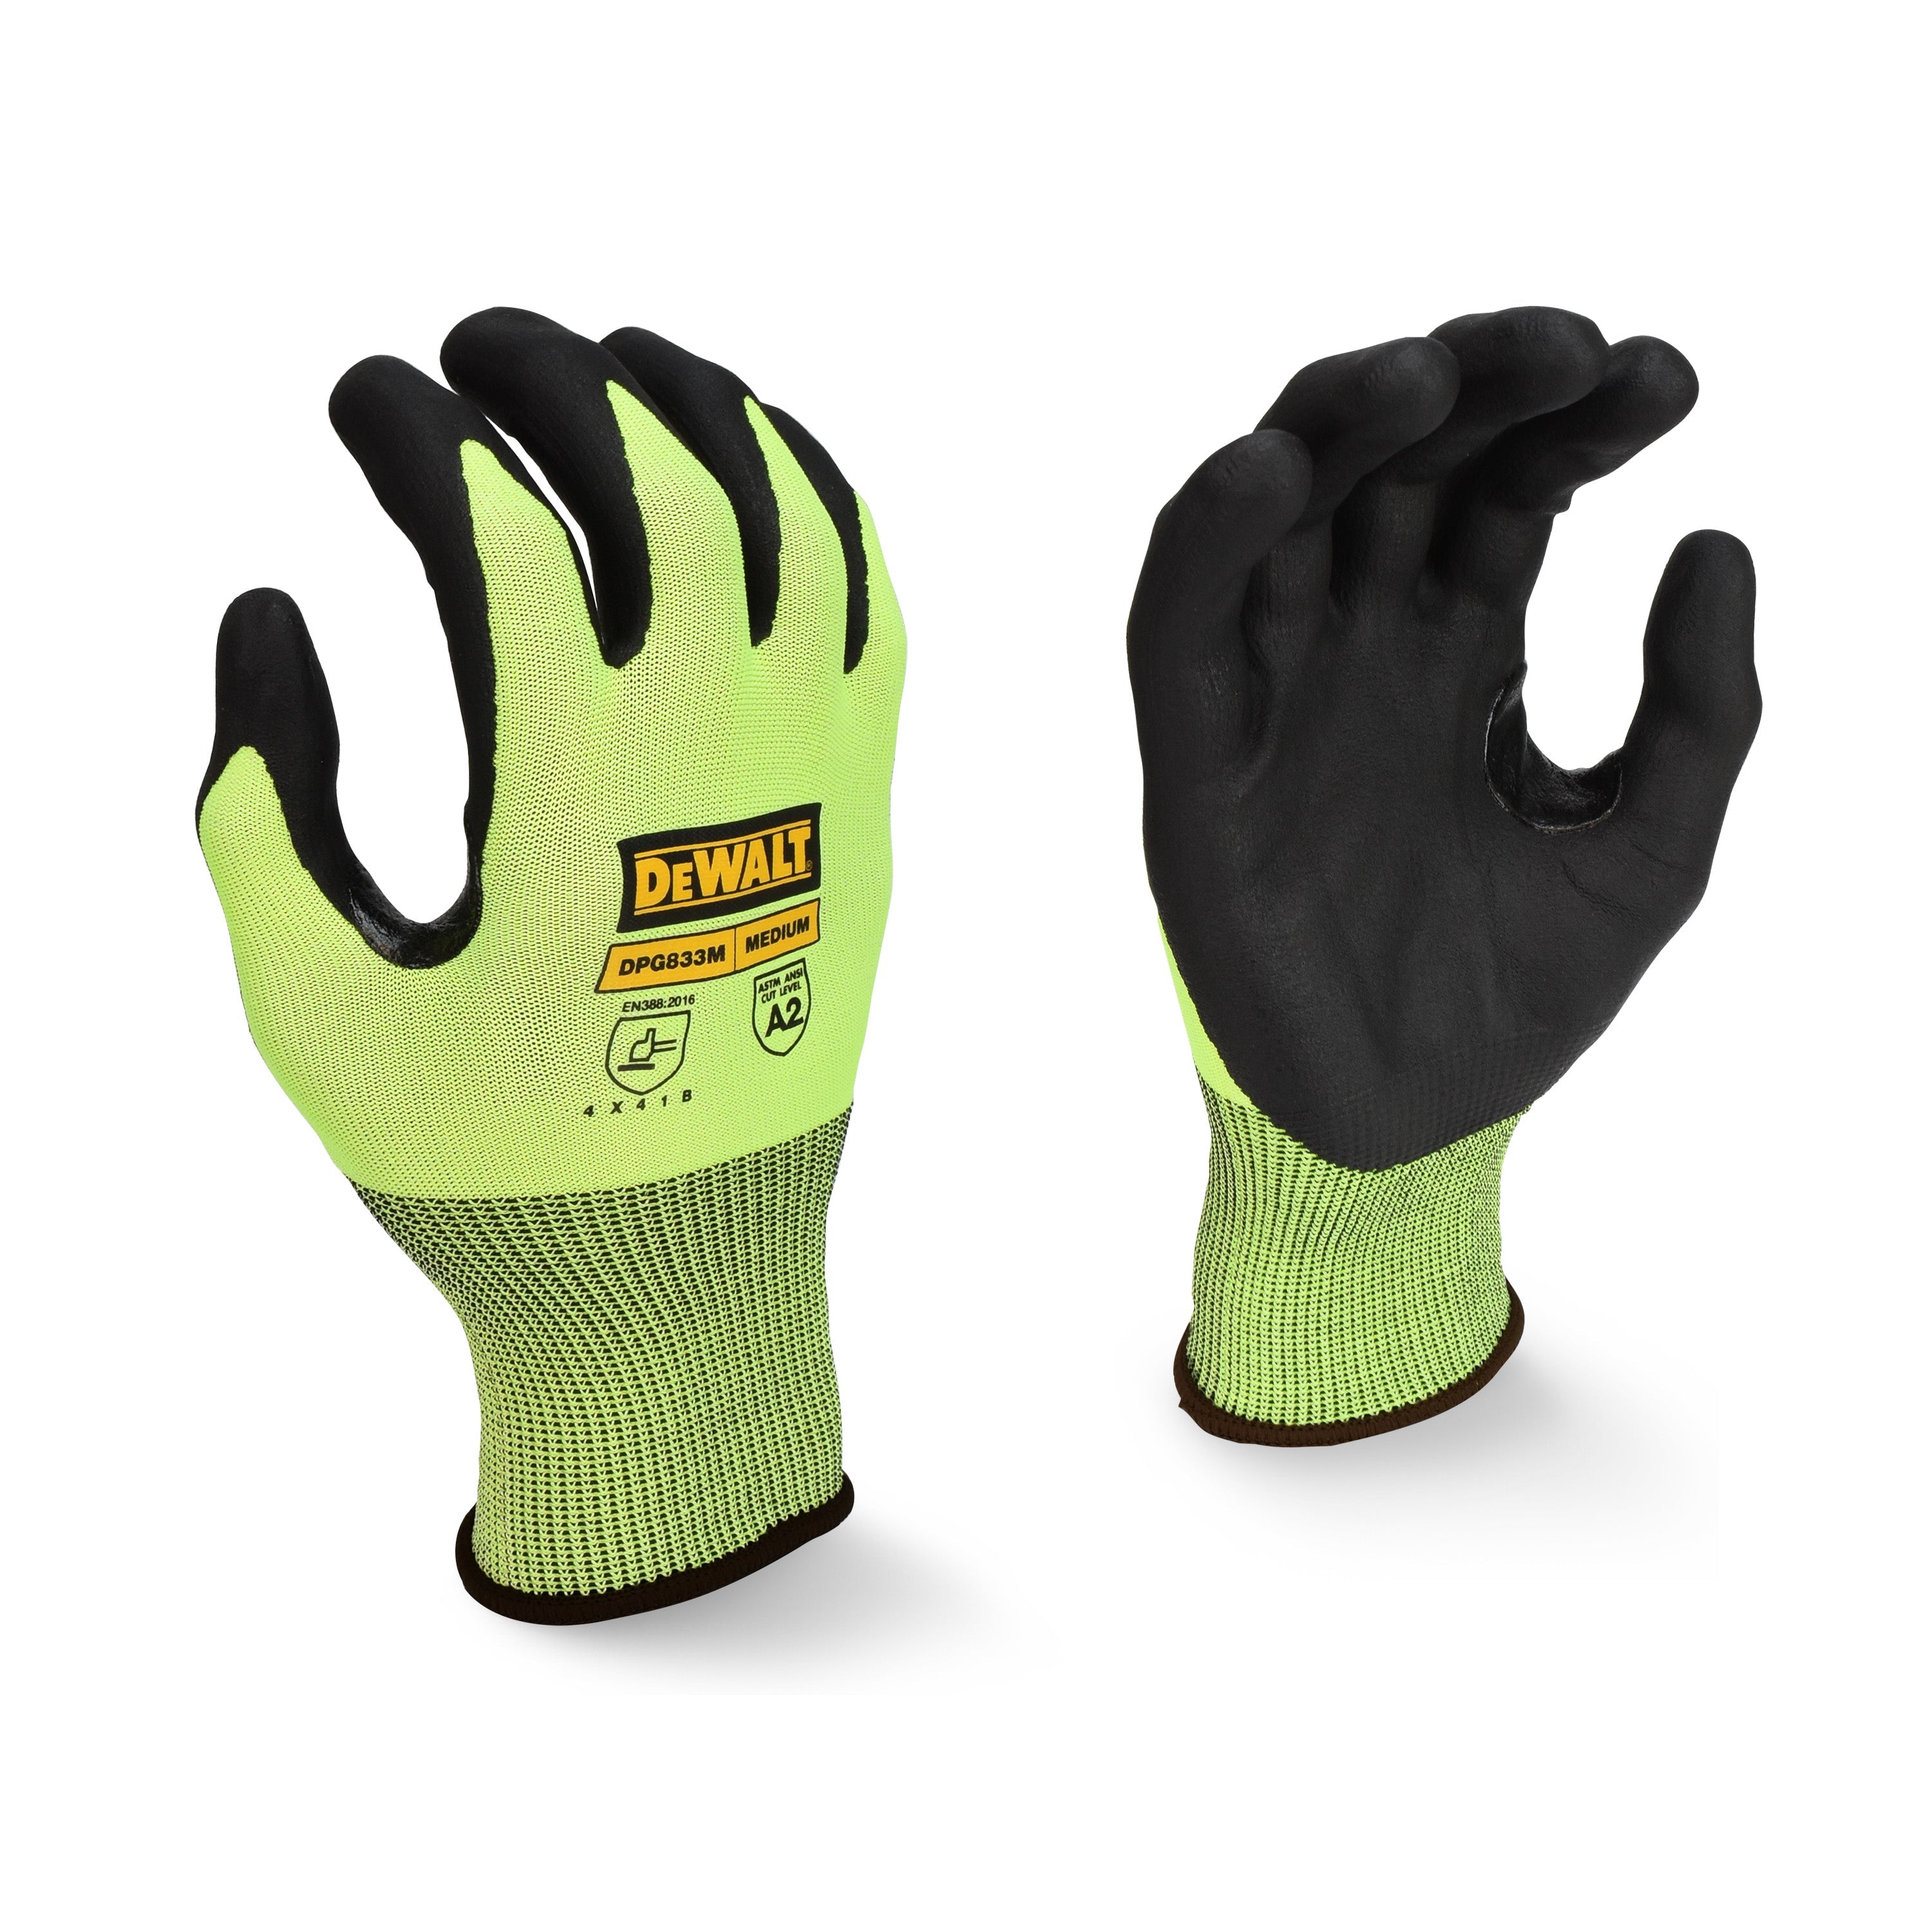 DEWALT DPG833T Hi-Vis HPPE Cut Touchscreen Glove